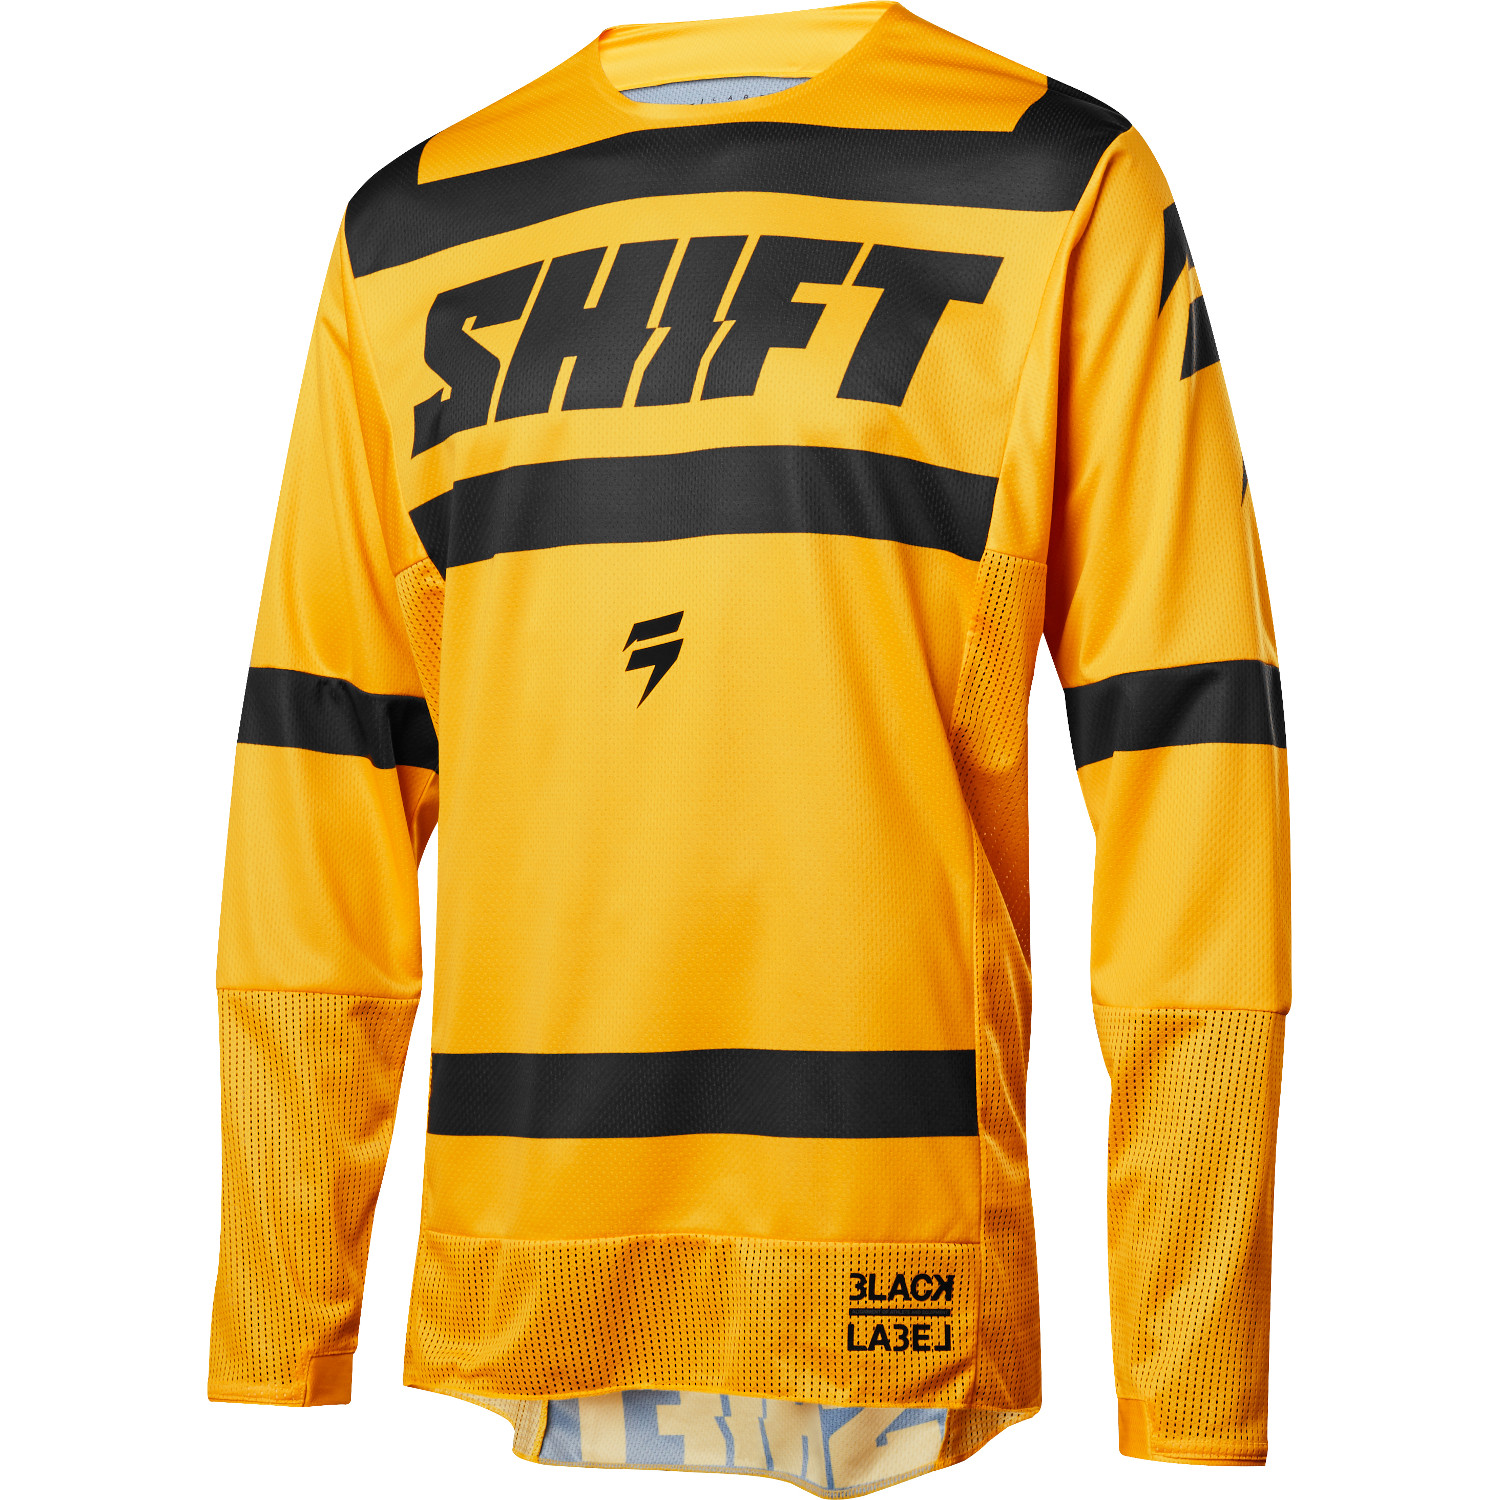 Shift Jersey 3lack Label Strike - Yellow